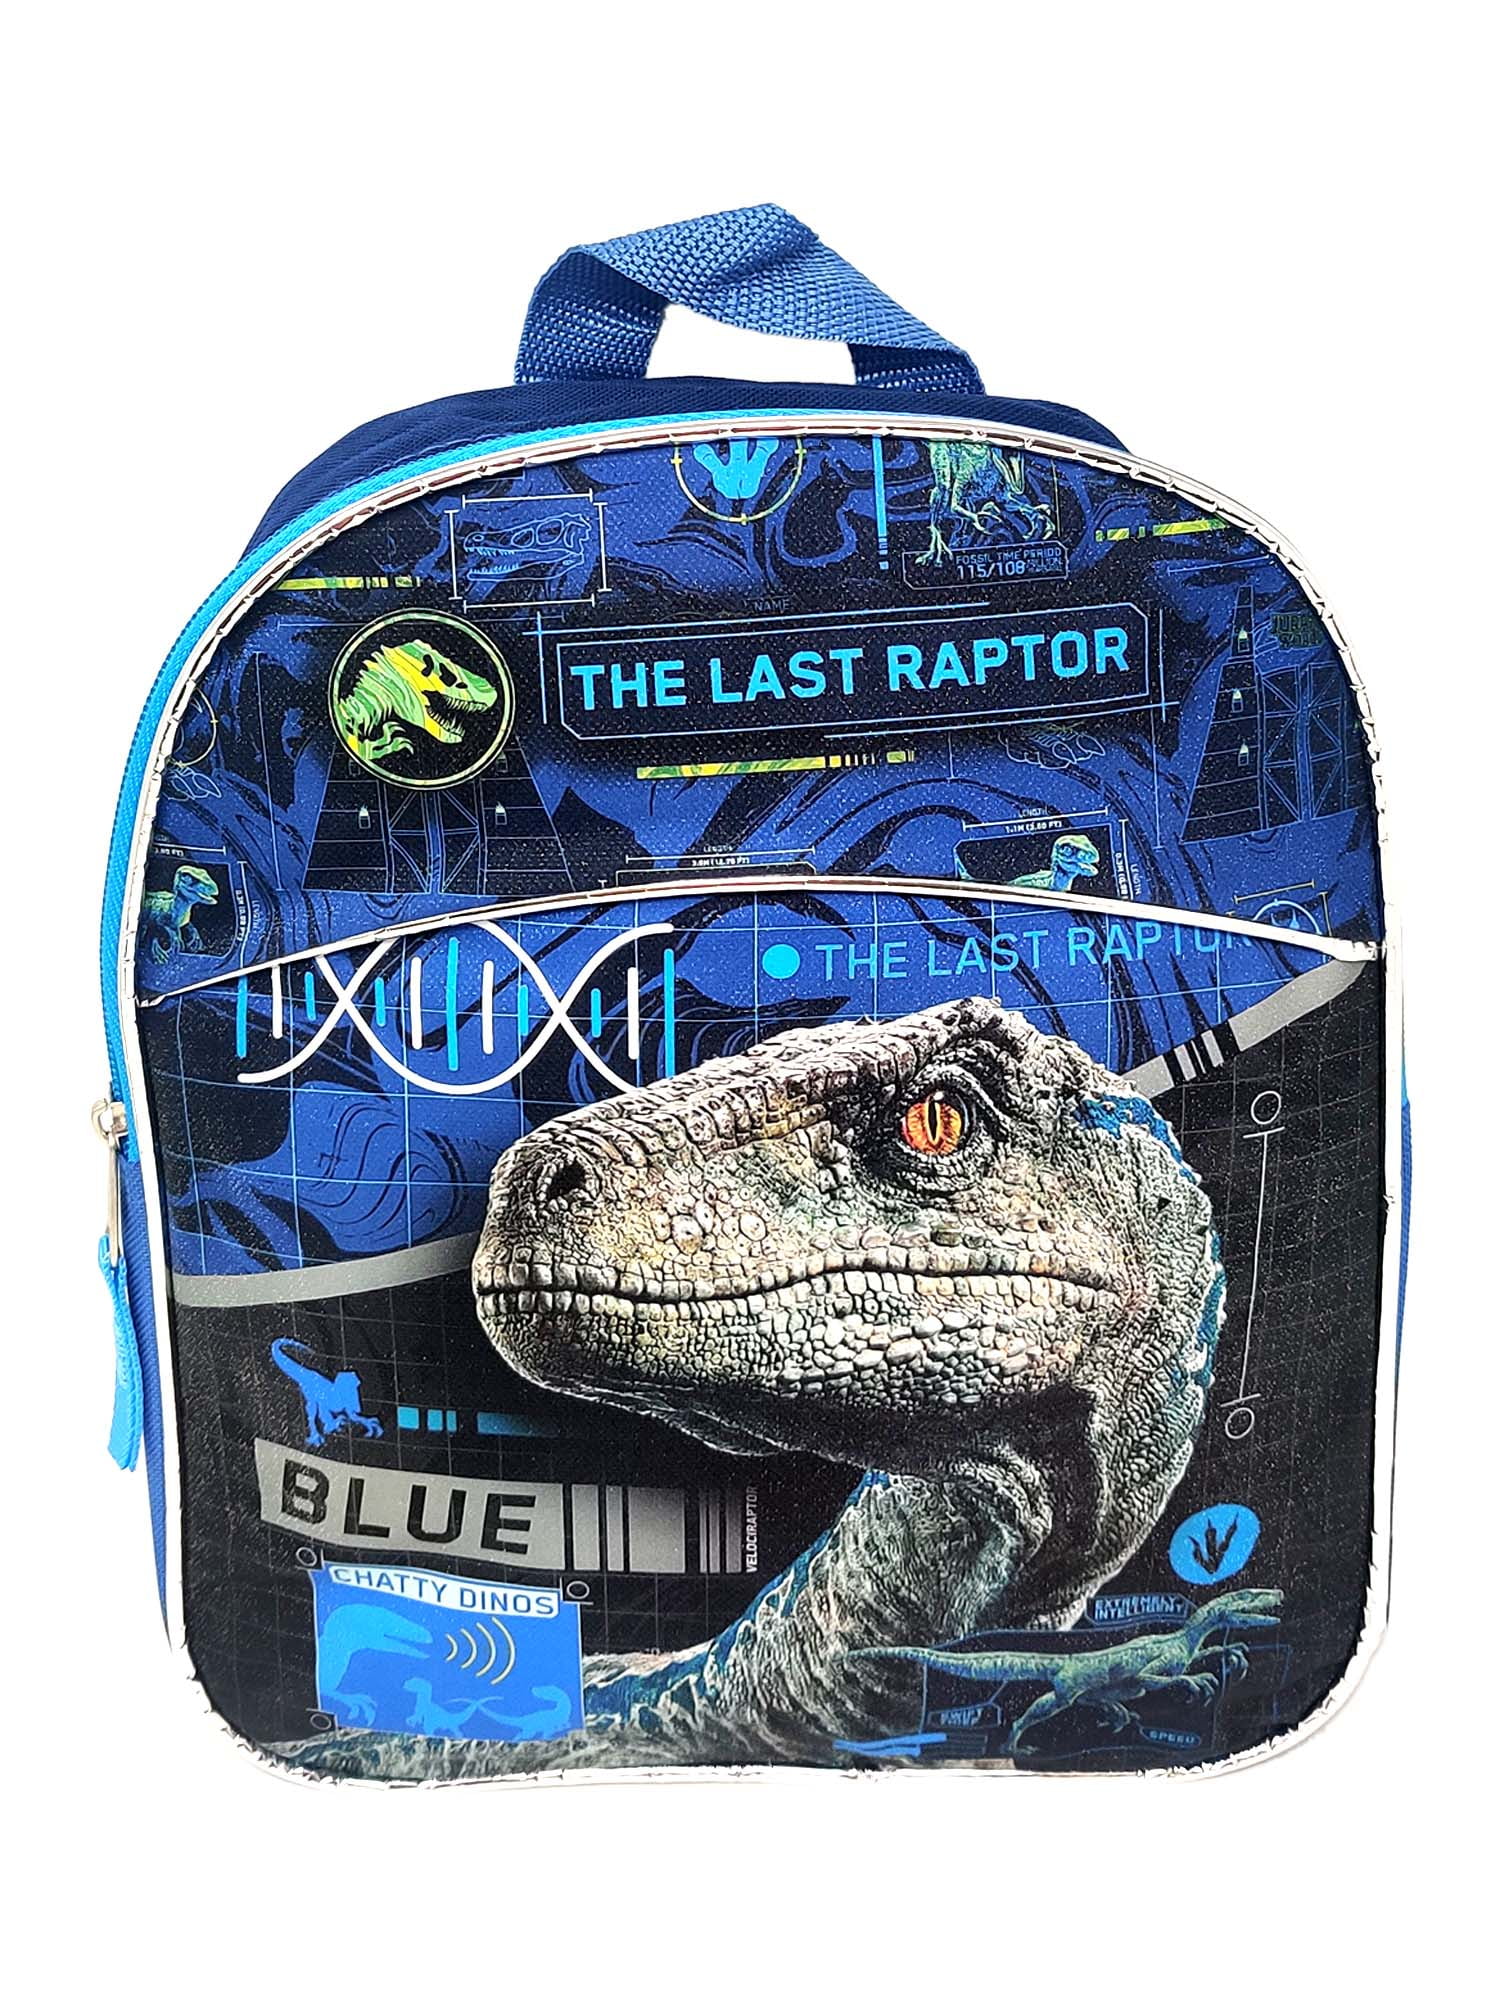 19 Boys Jurassic World School Bag Dinosaur Park Backpack Shoulder Rucksack Hot l 